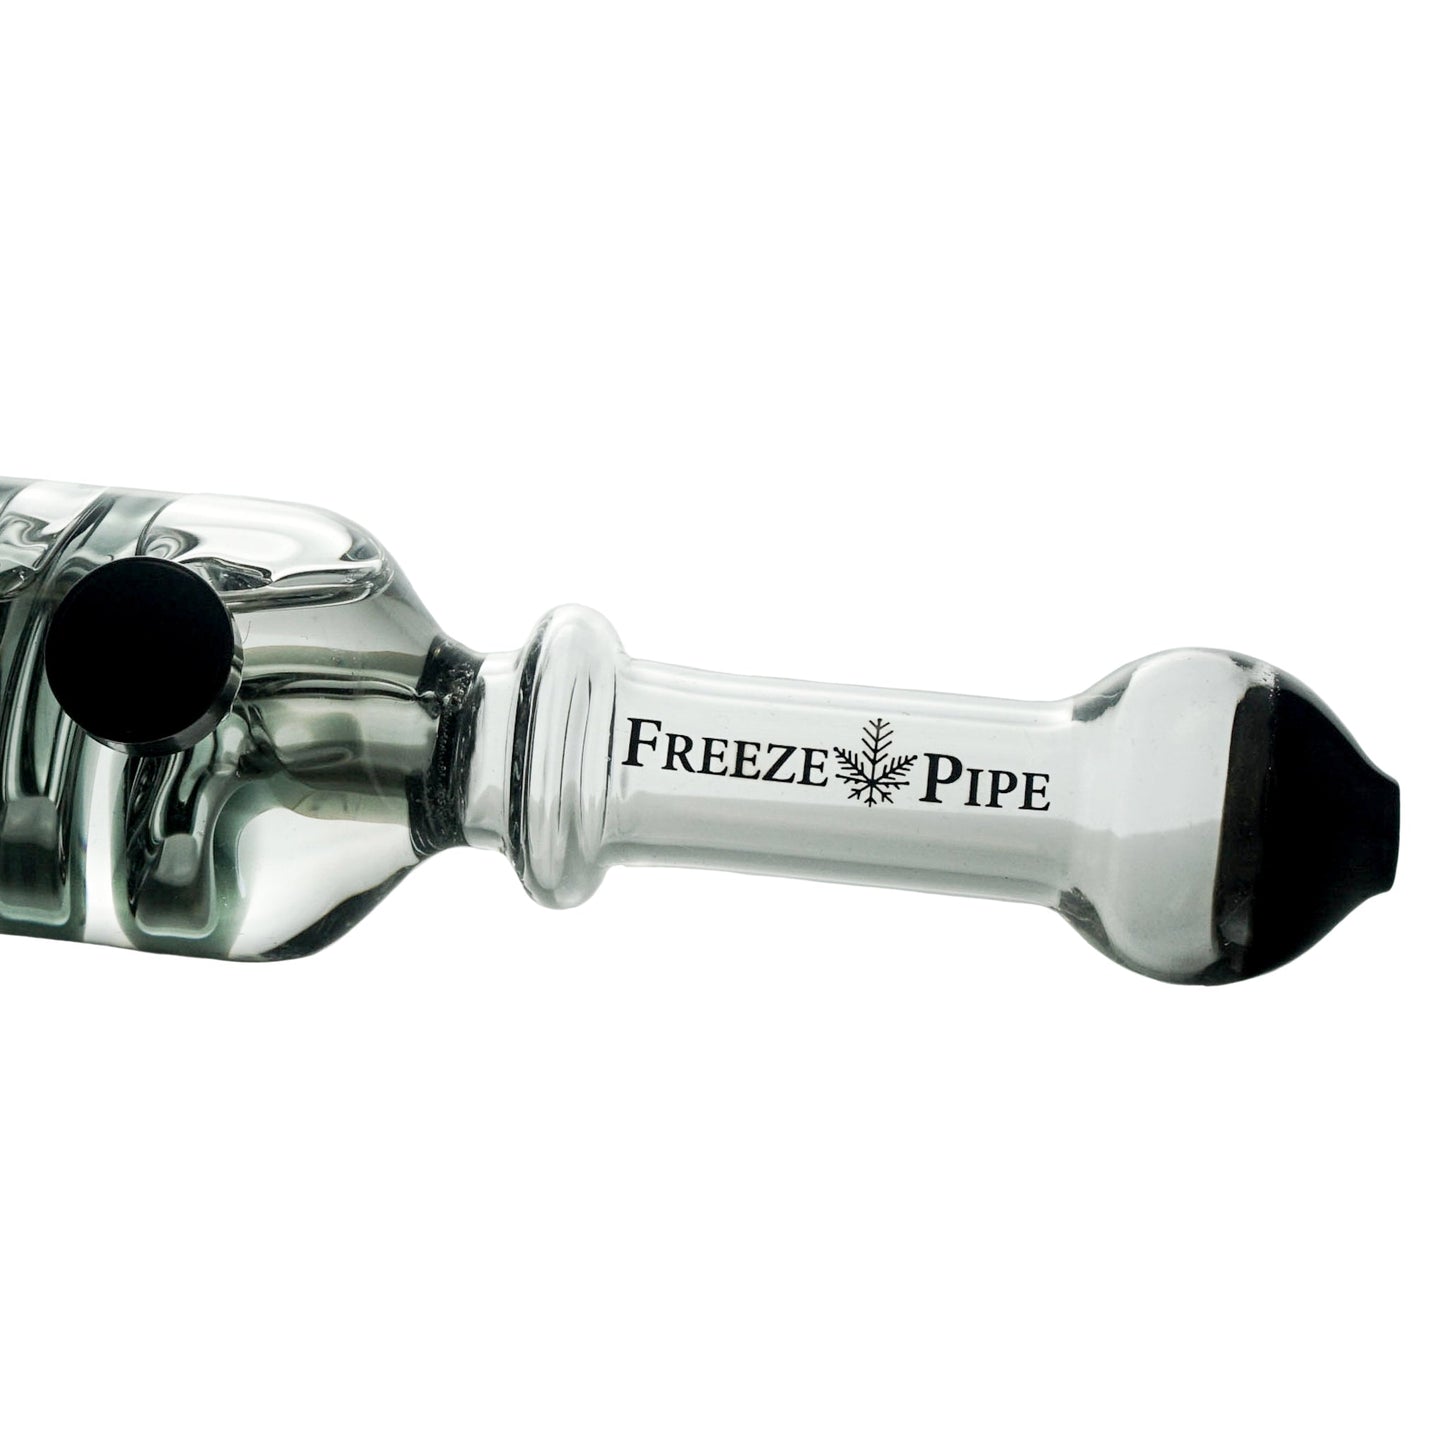 Freeze Pipe The Classic The Original